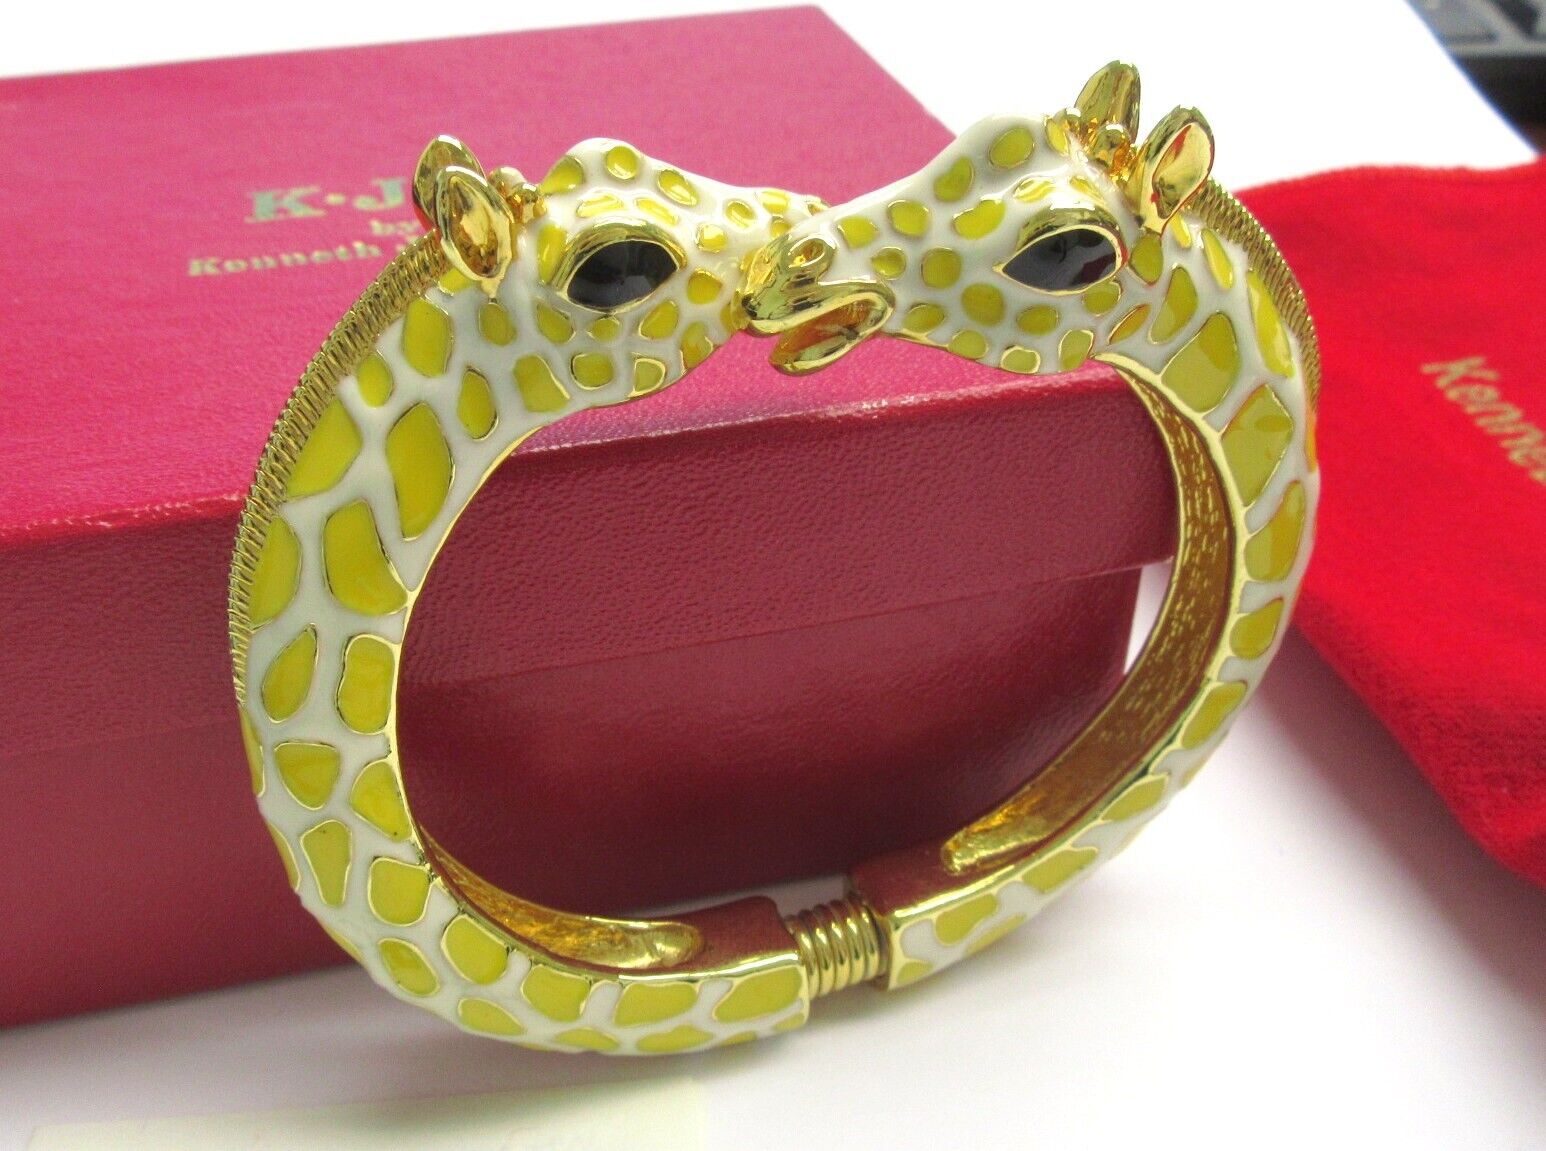 Kenneth Jay Lane Signed Yellow Giraffes Bangle Bracelet w Original Box, Papers